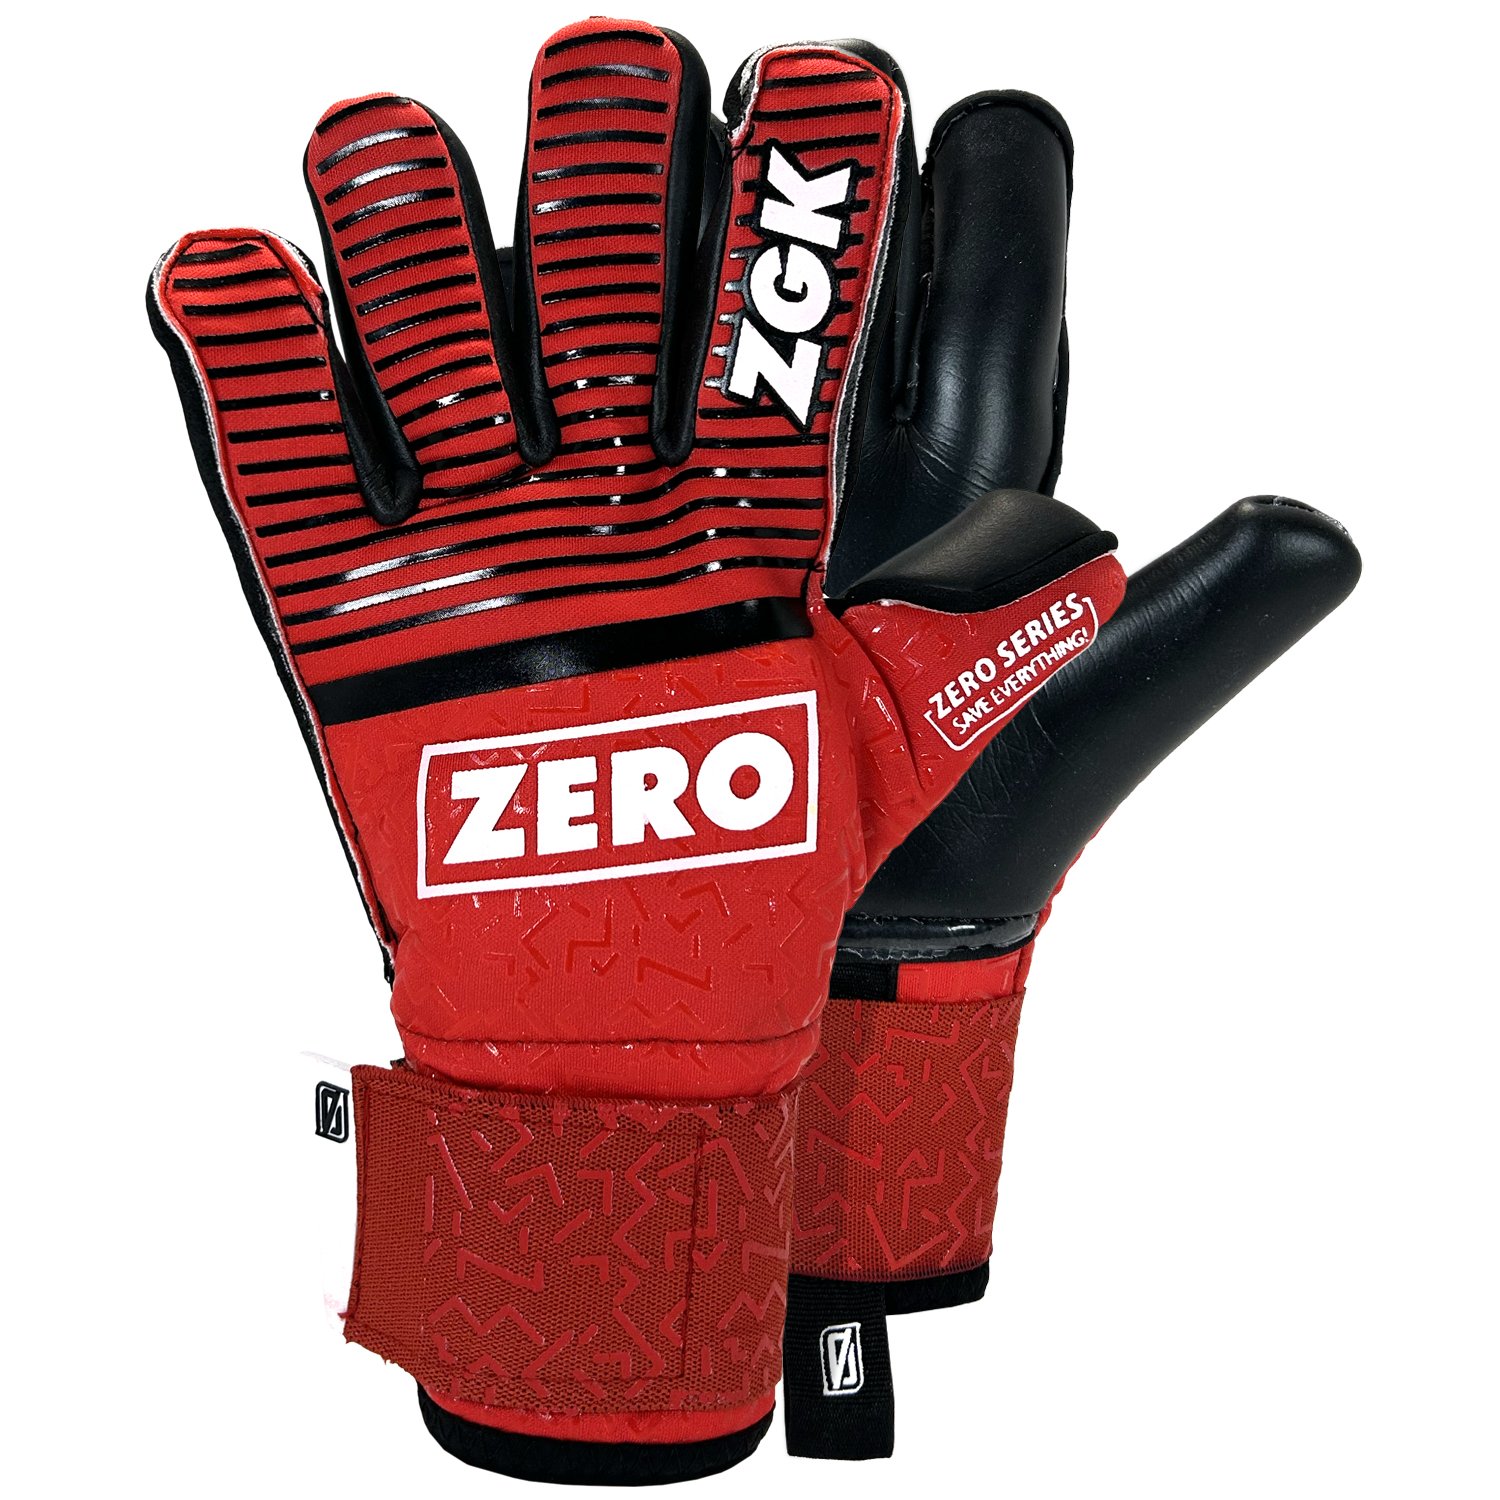 Products | Zero Goalkeeper